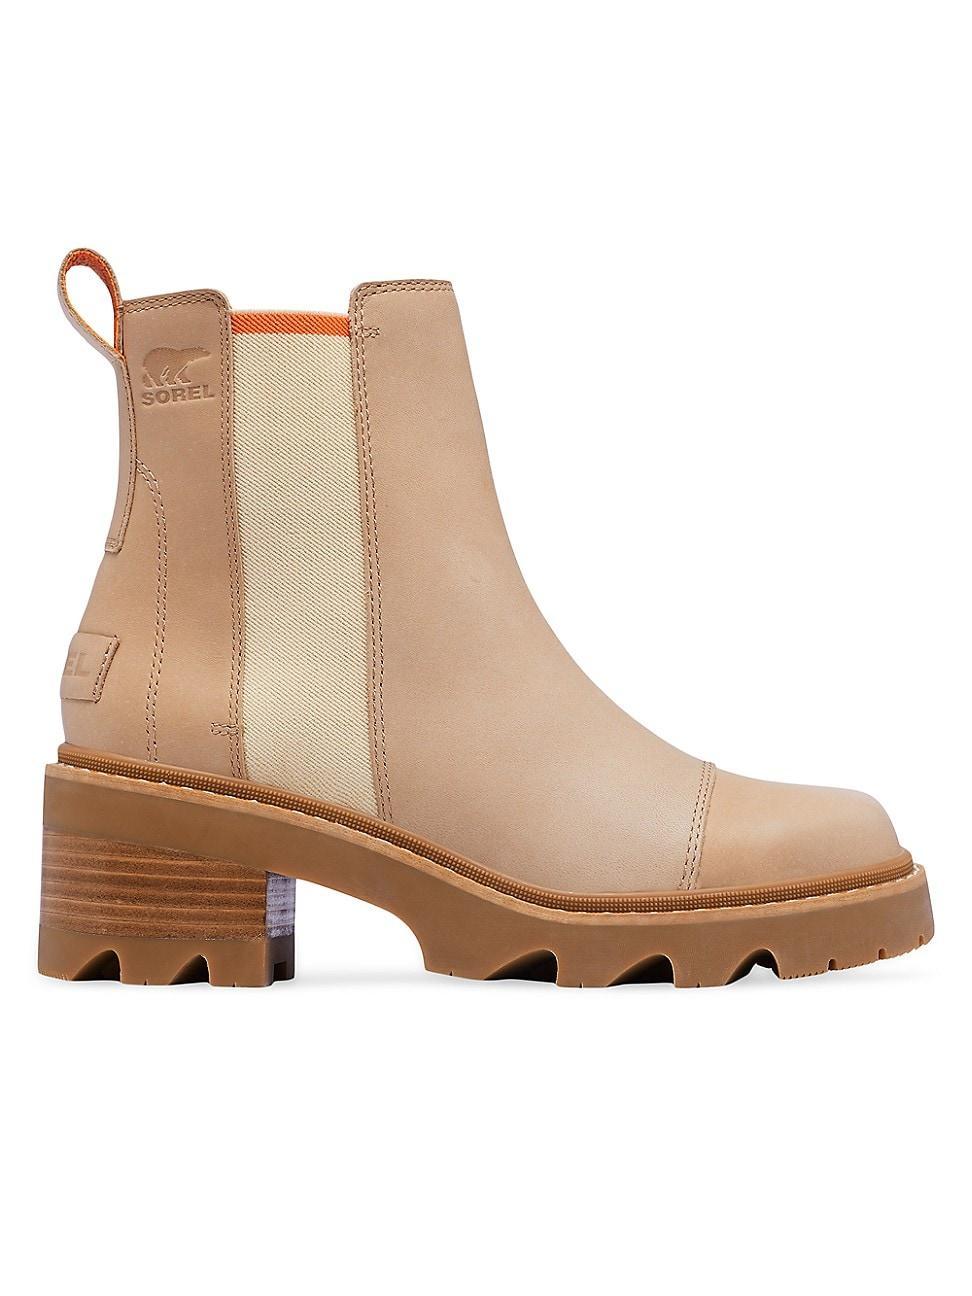 SOREL Joan Now Waterproof Chelsea Boot Product Image